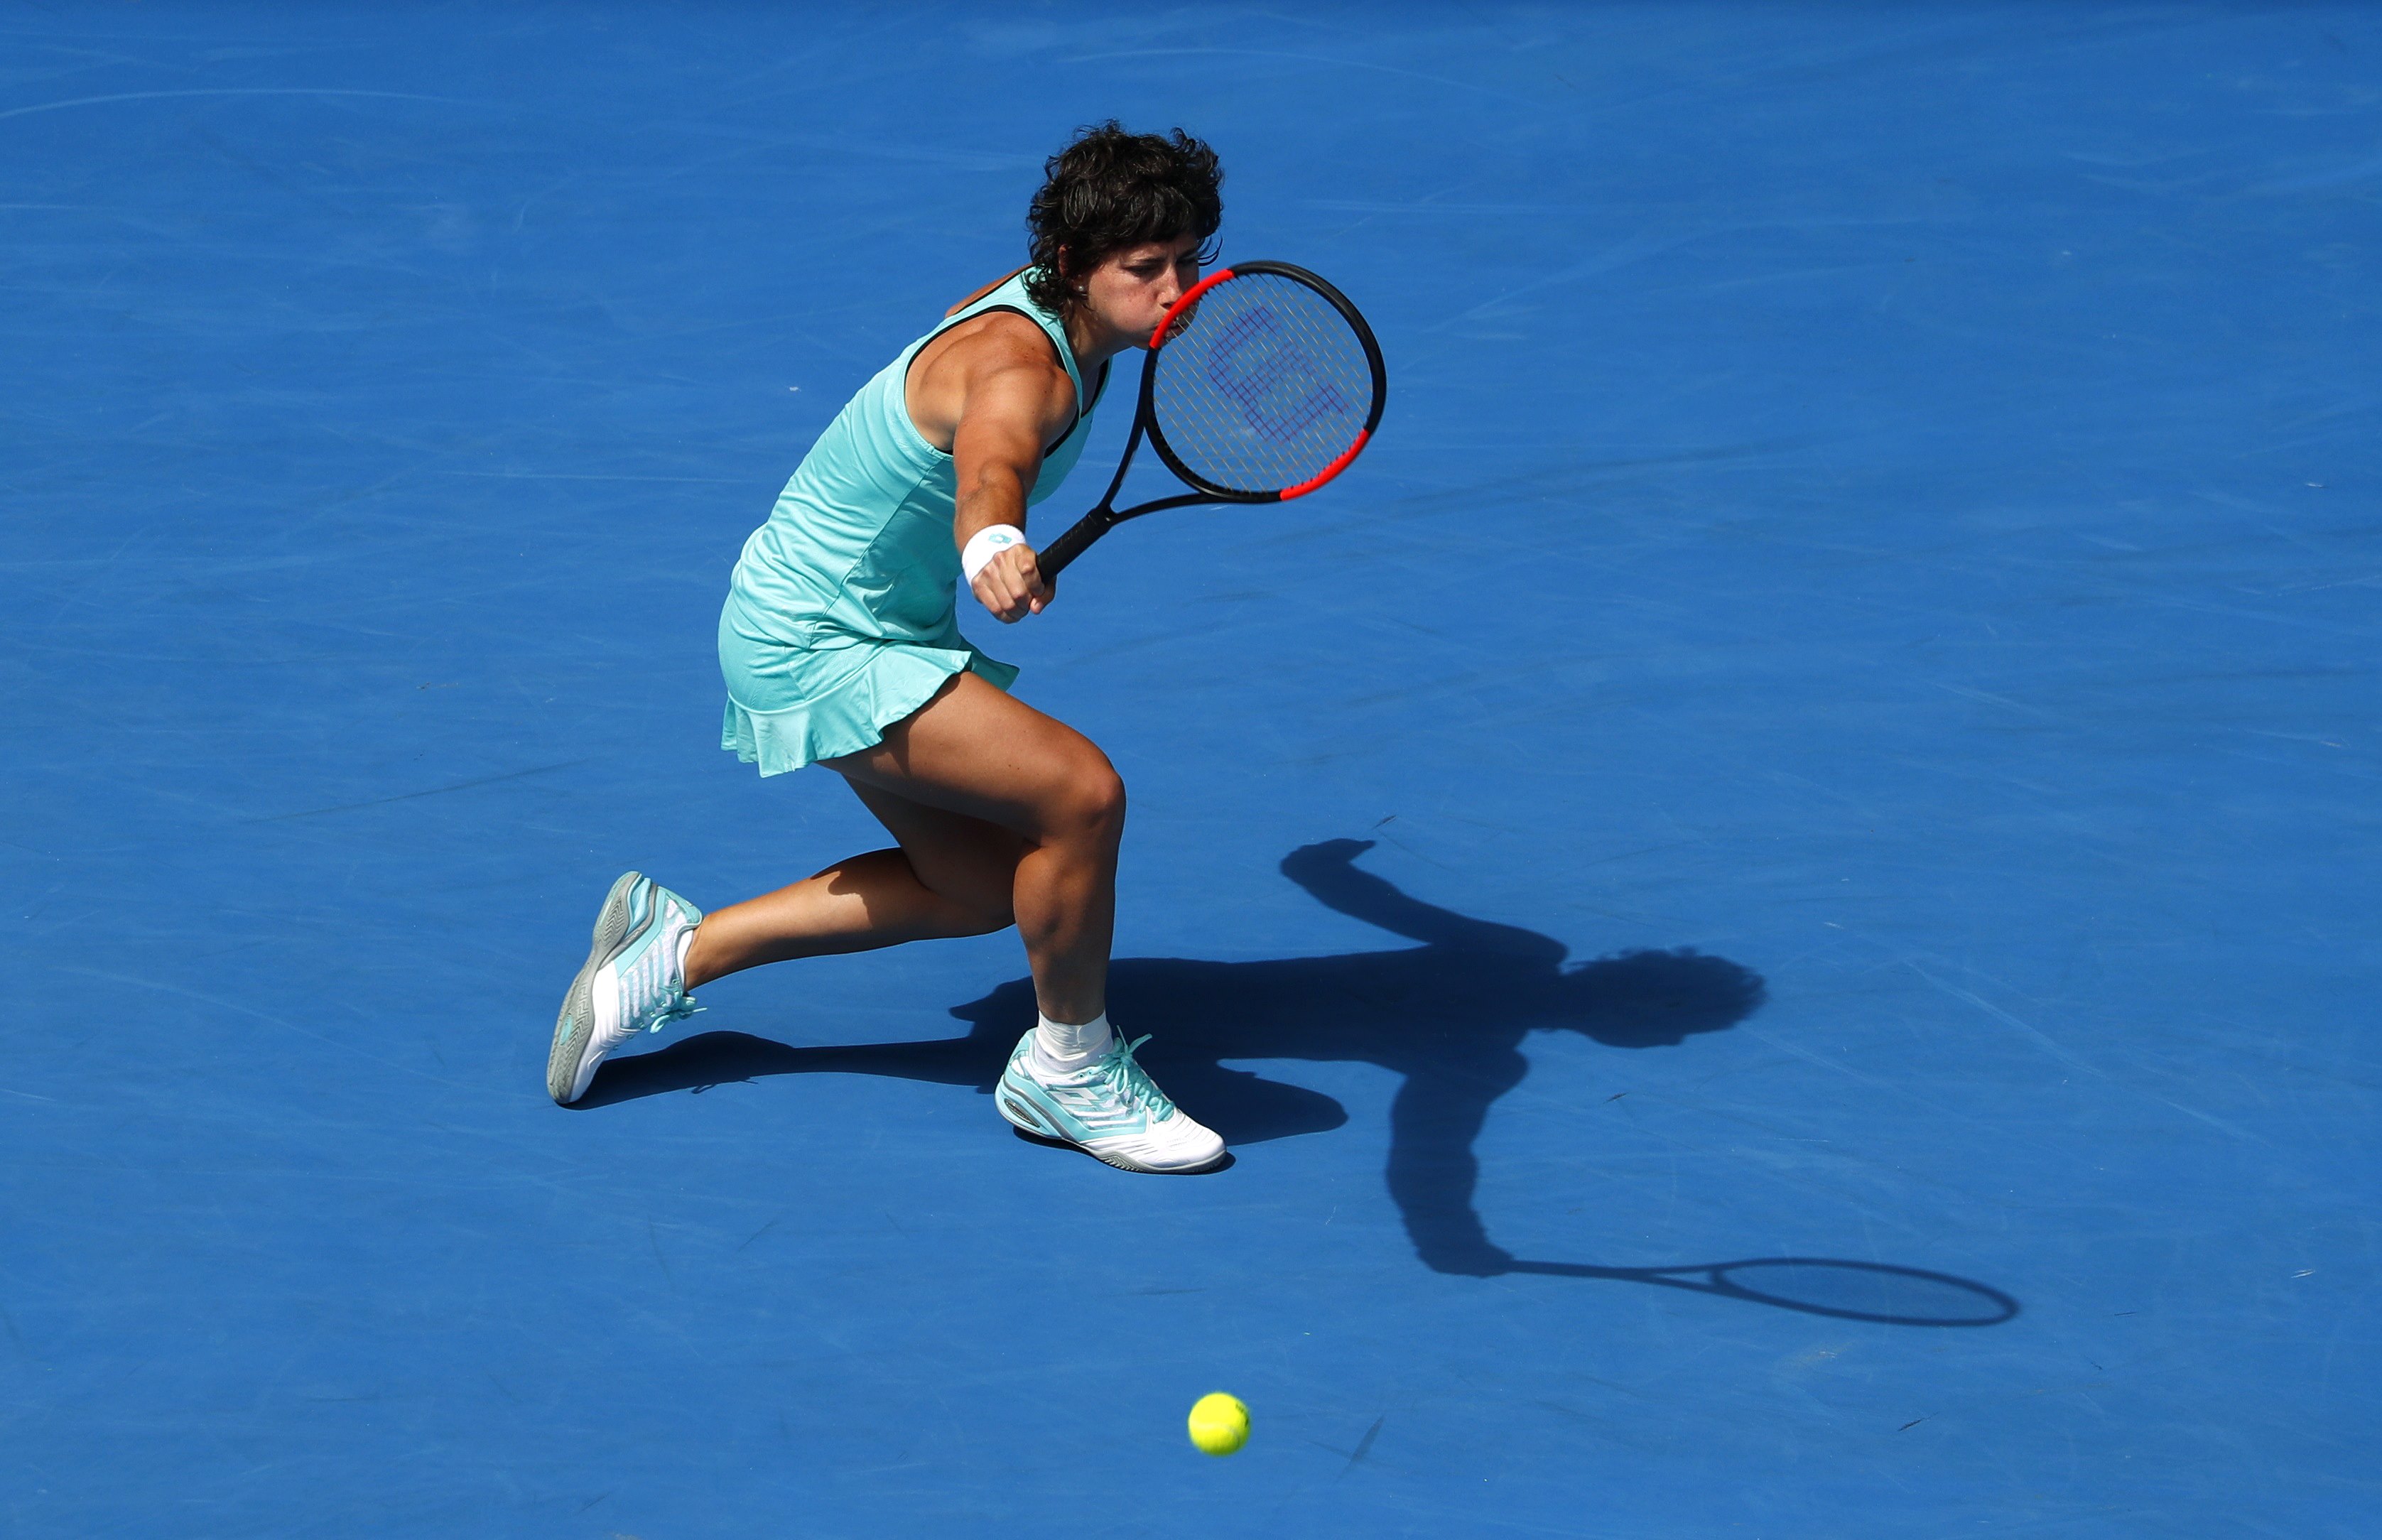 Tennis: Free and single-handed, Navarro enters last eight